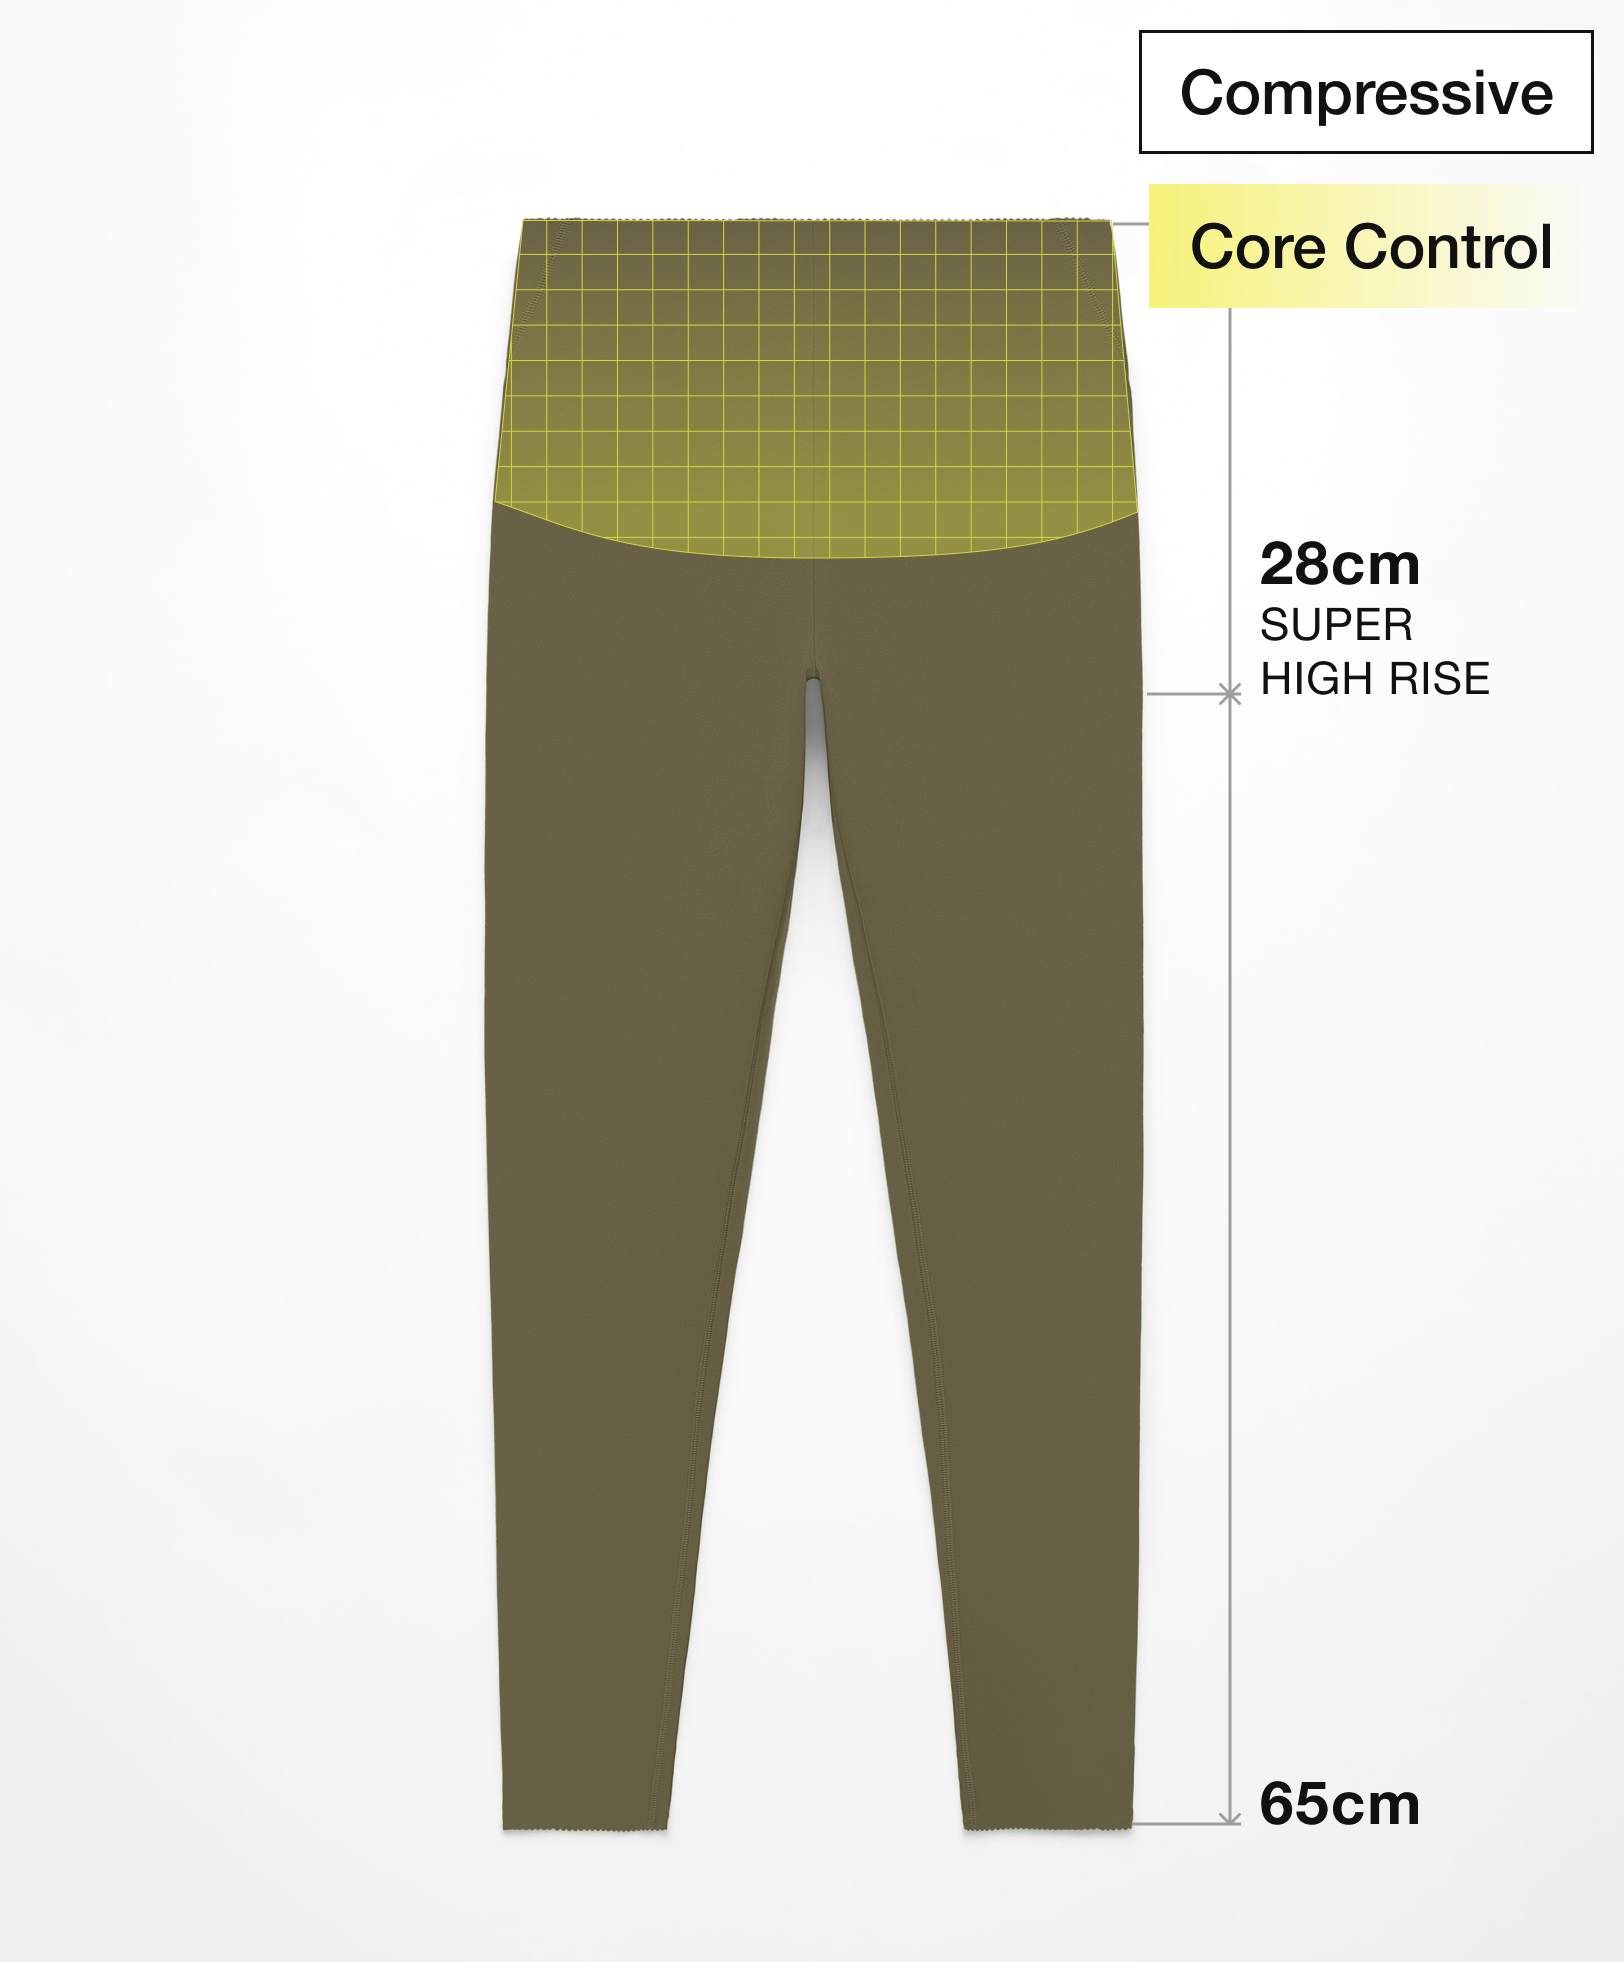 Leggings super high rise compressive core control